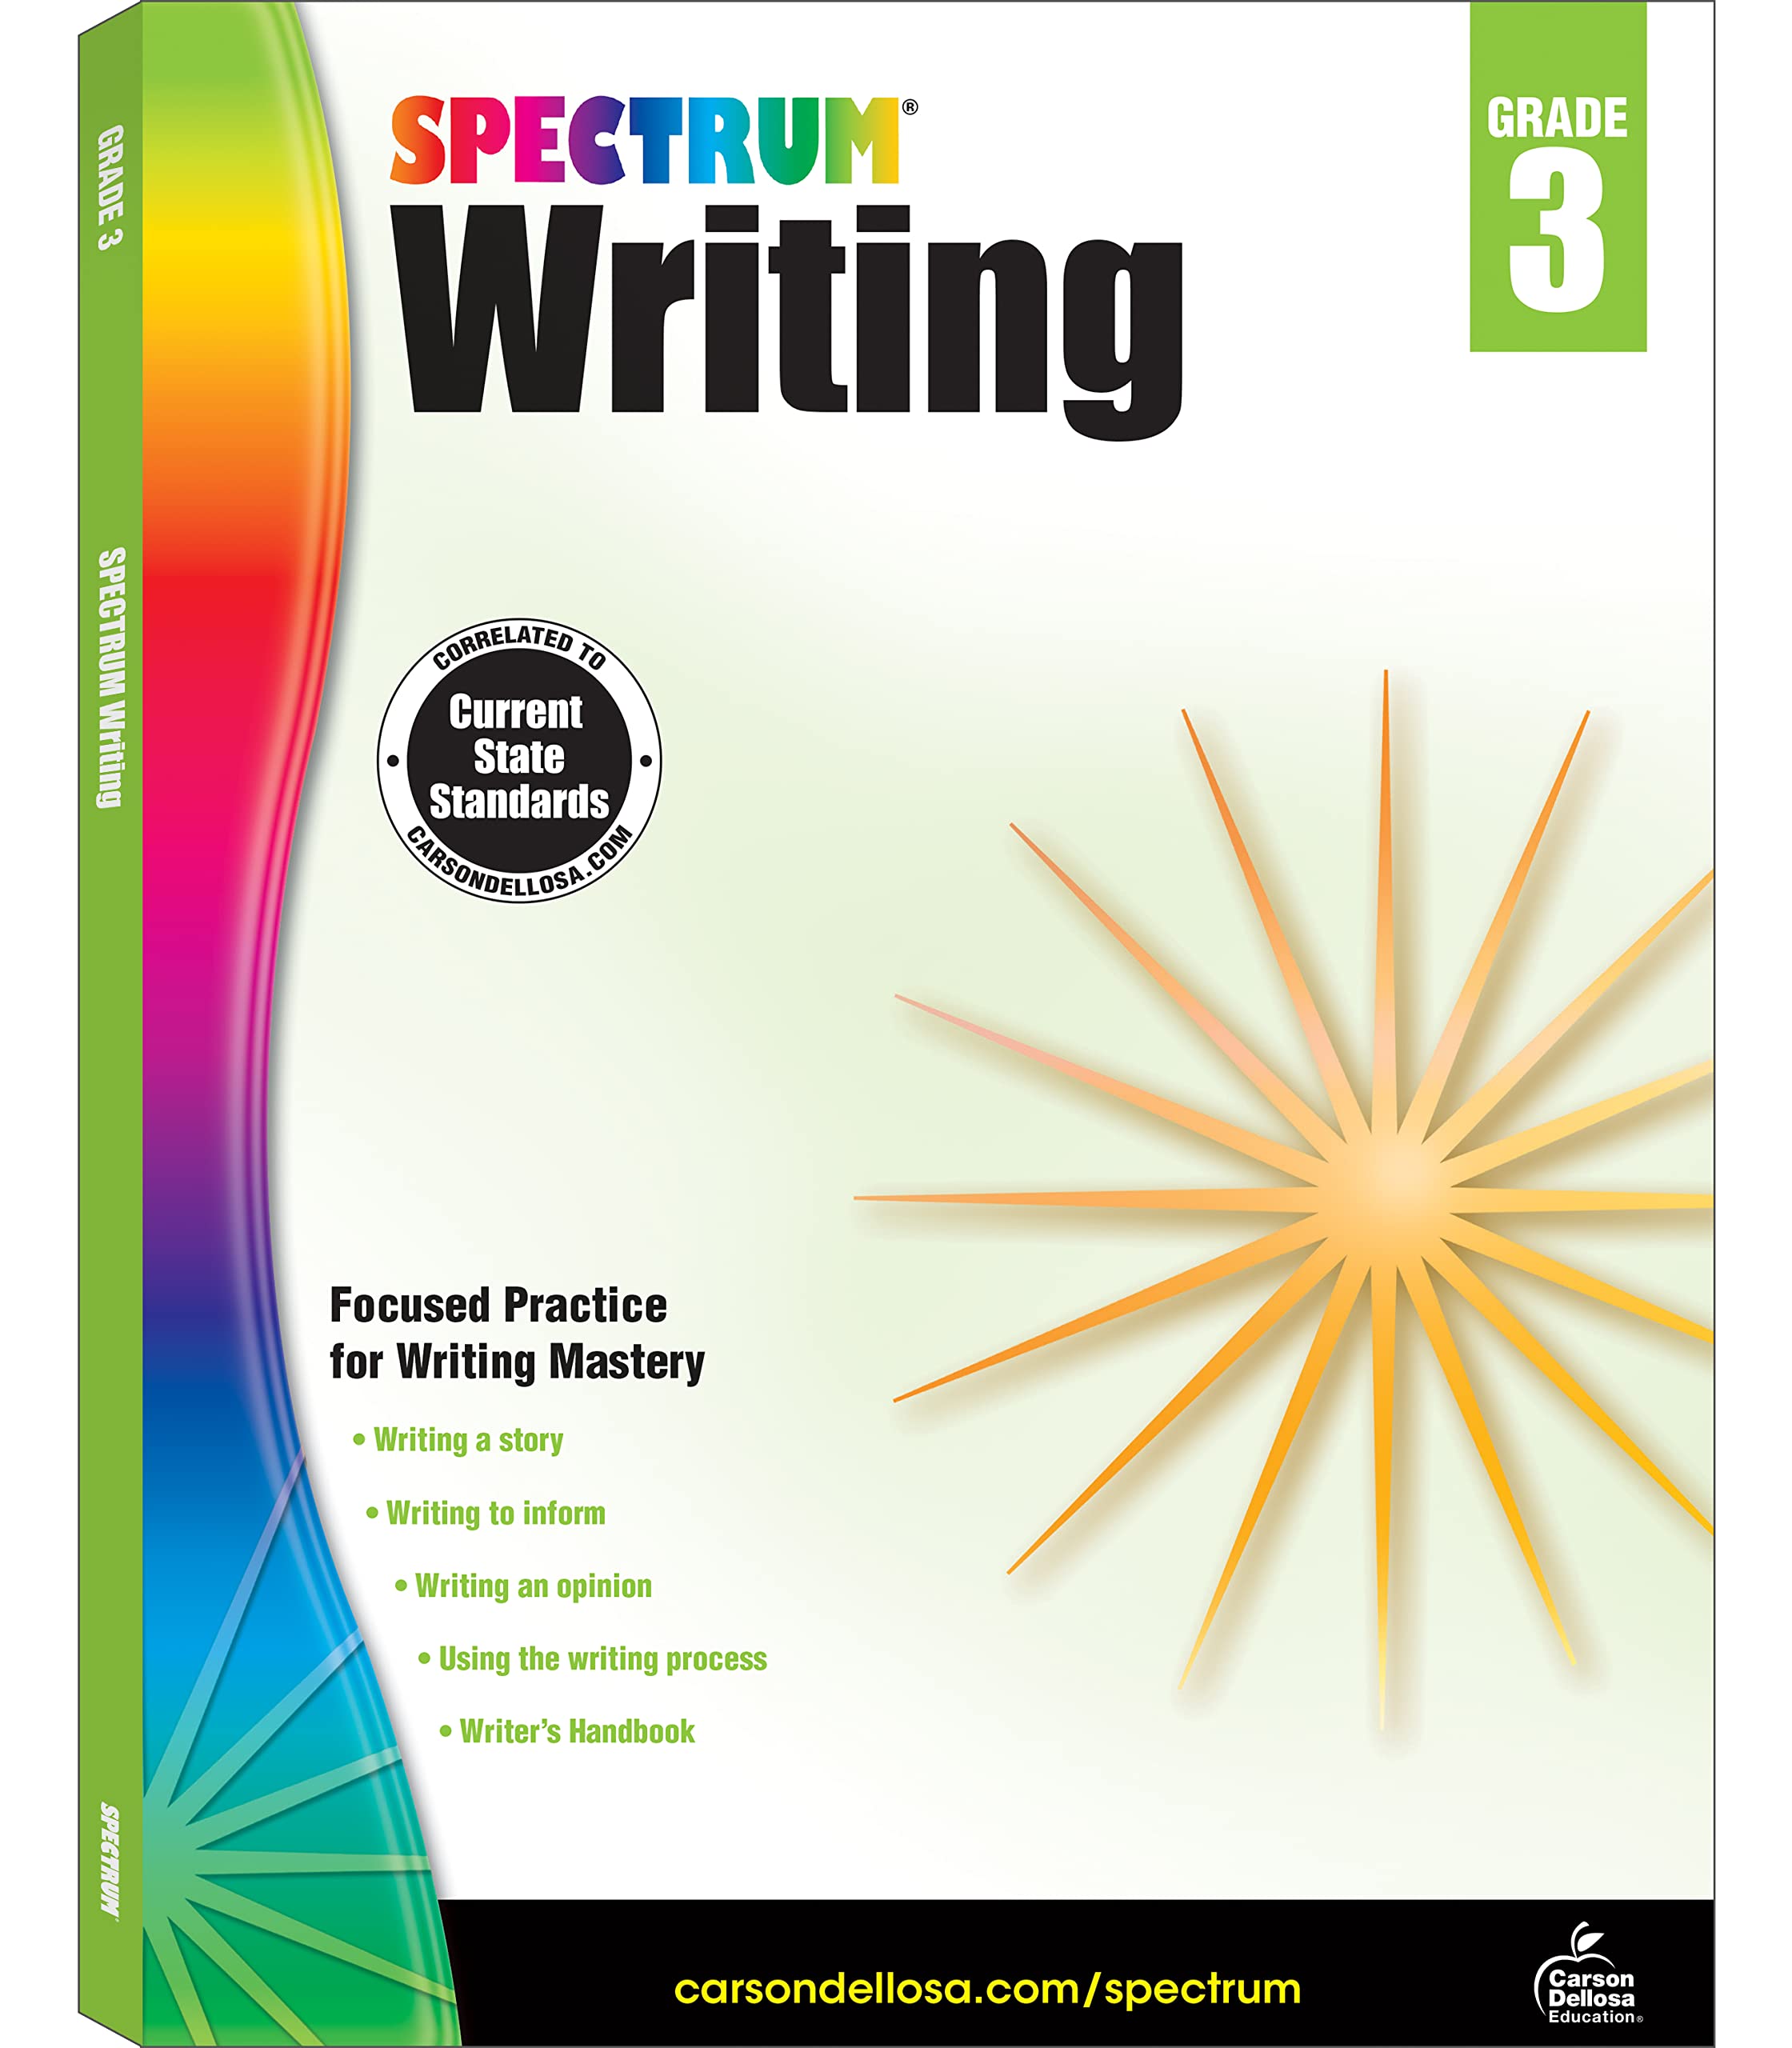 Spectrum Writing, Grade 3 by Spectrum